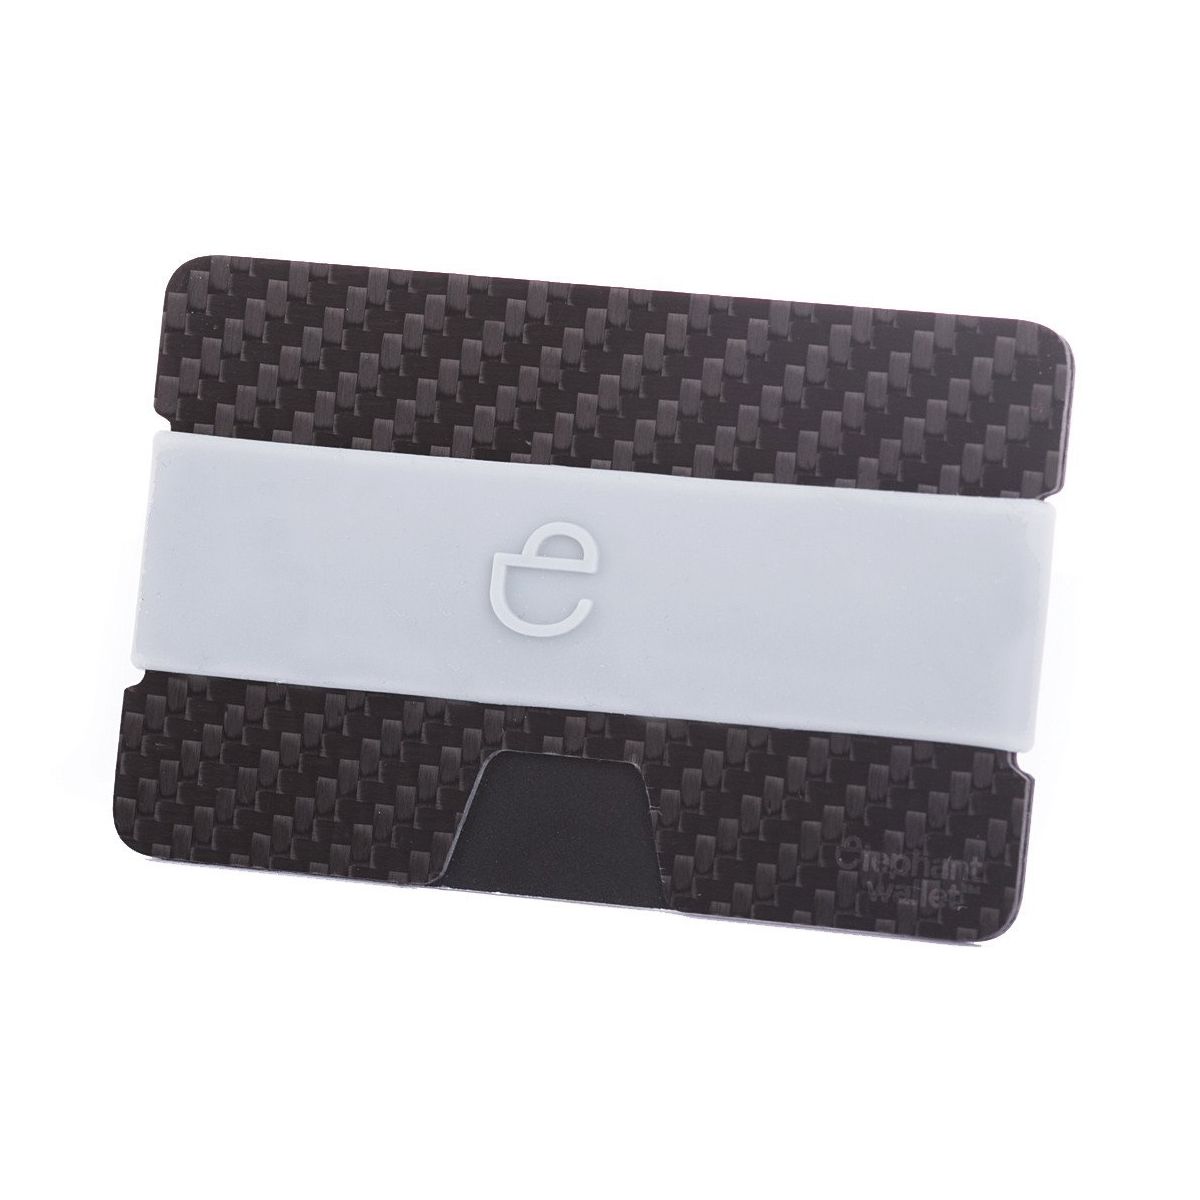 Minimalist Carbon Fiber Wallet with Silicone Strap - Carbon/Grey